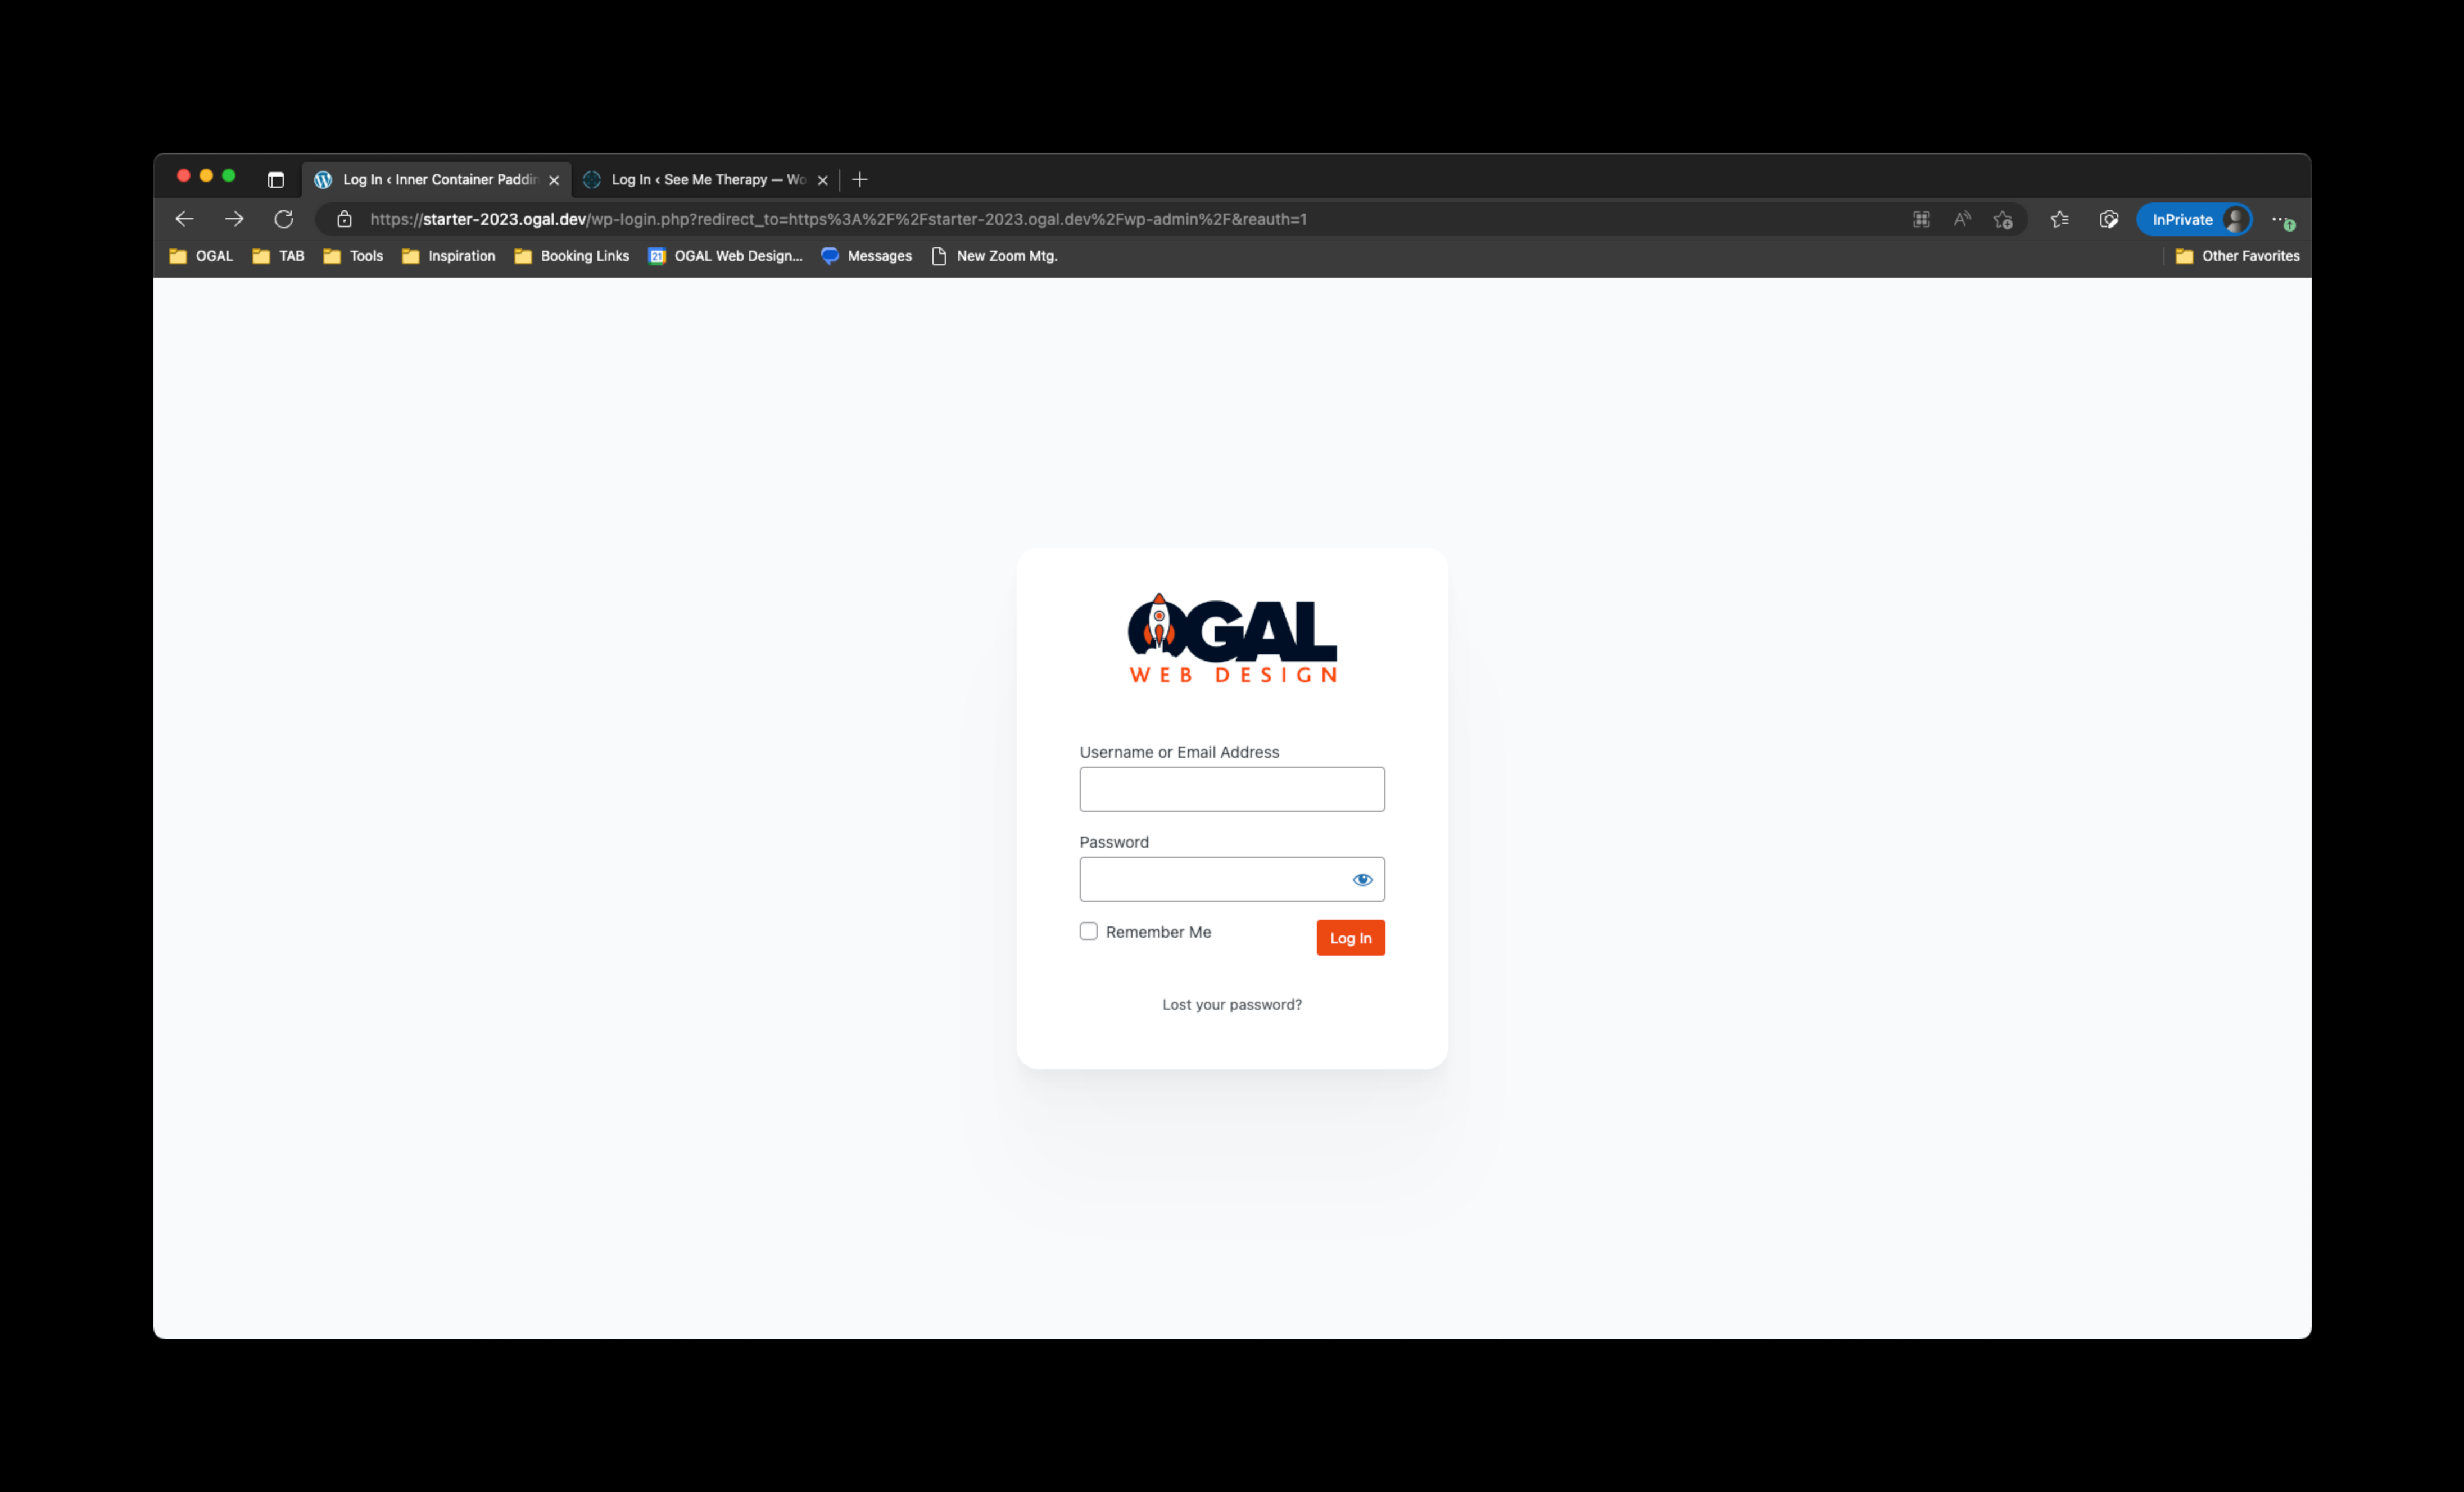 OGAL WordPress login screen